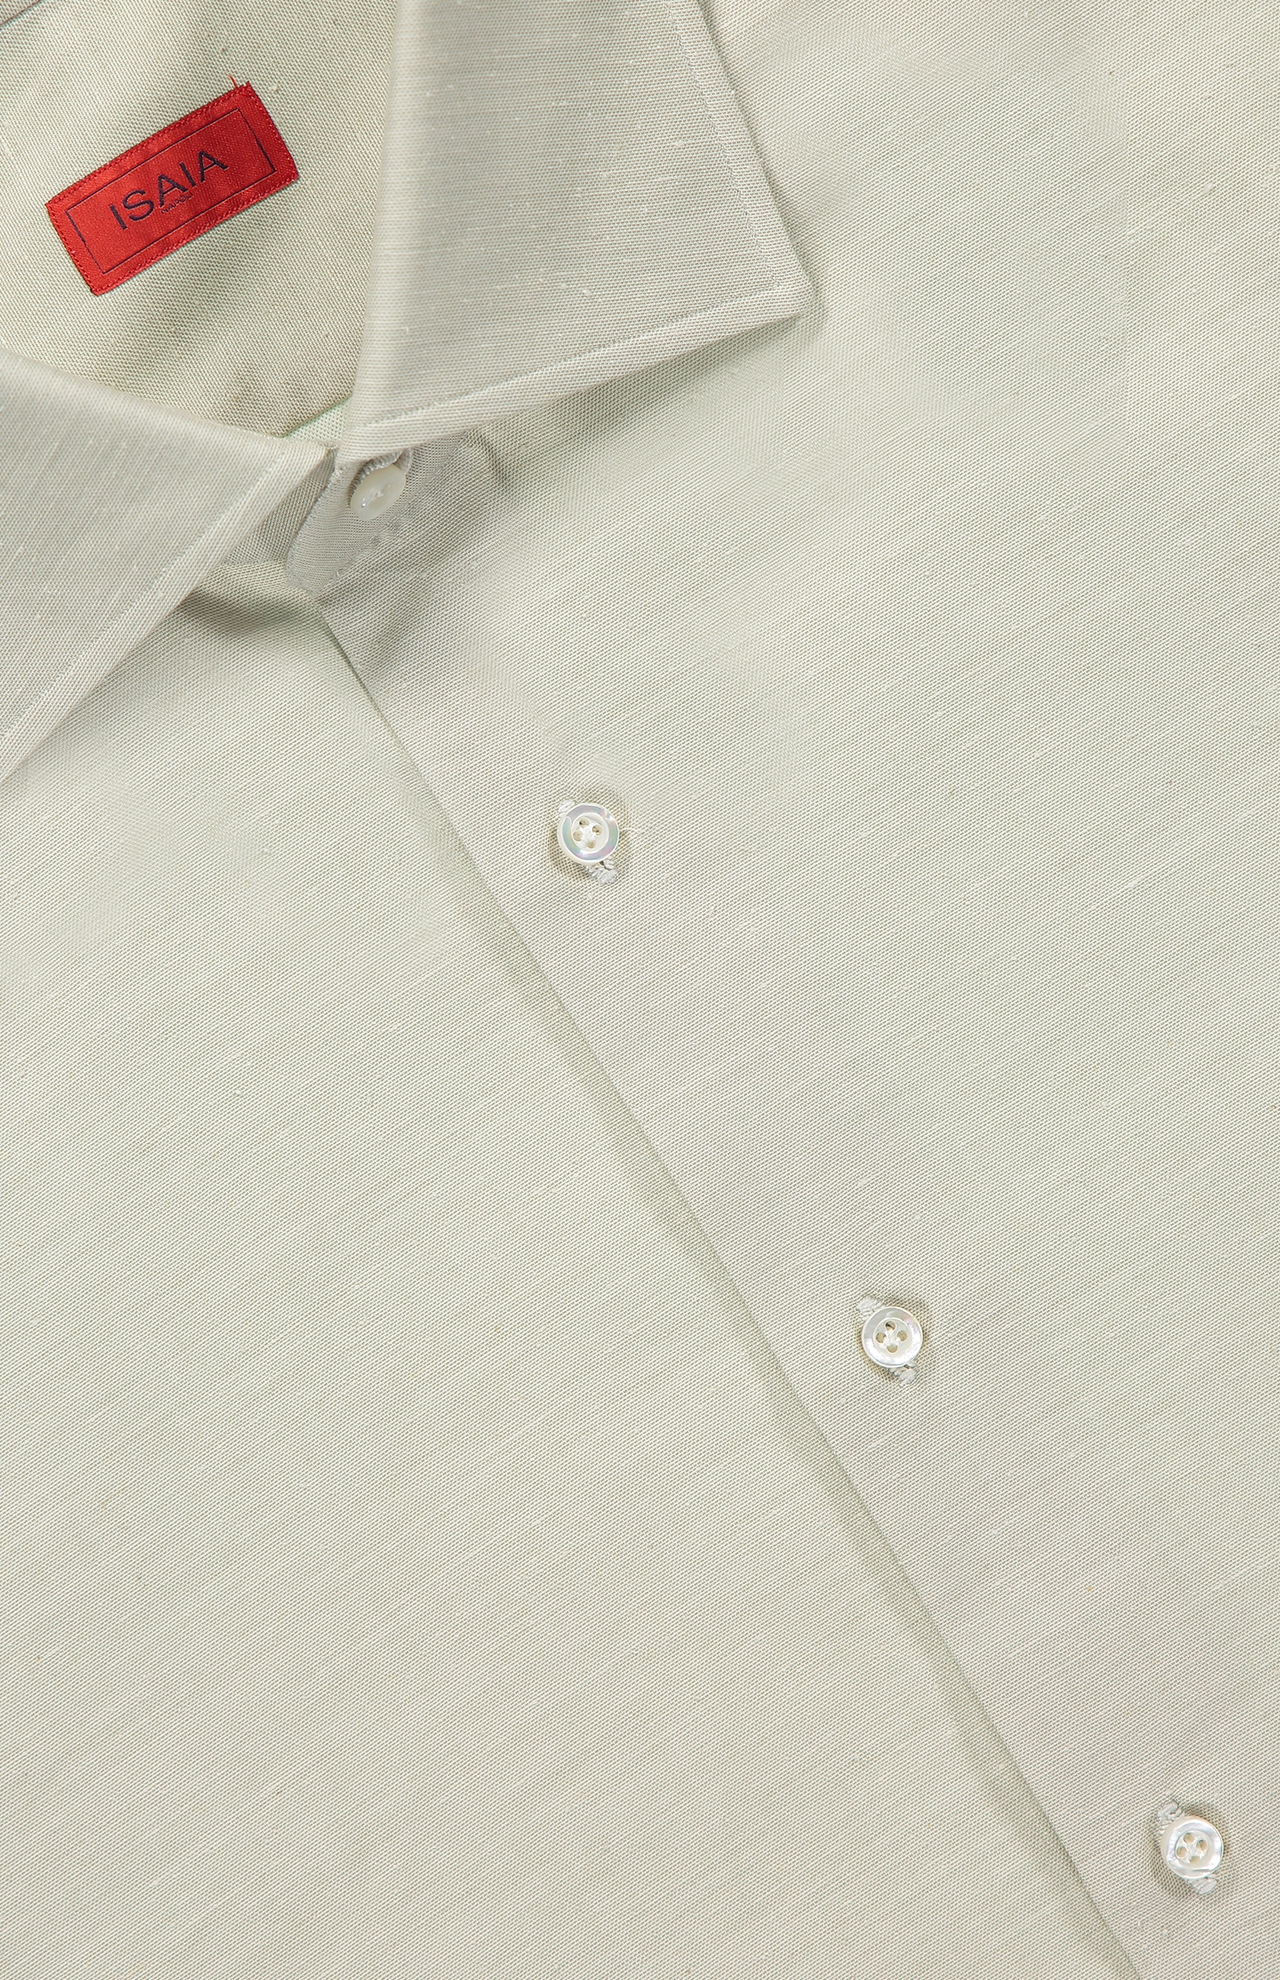 Isaia Solid Dress Shirt Cotton Silk Light Grey Top Detail Image  (7018825646195)